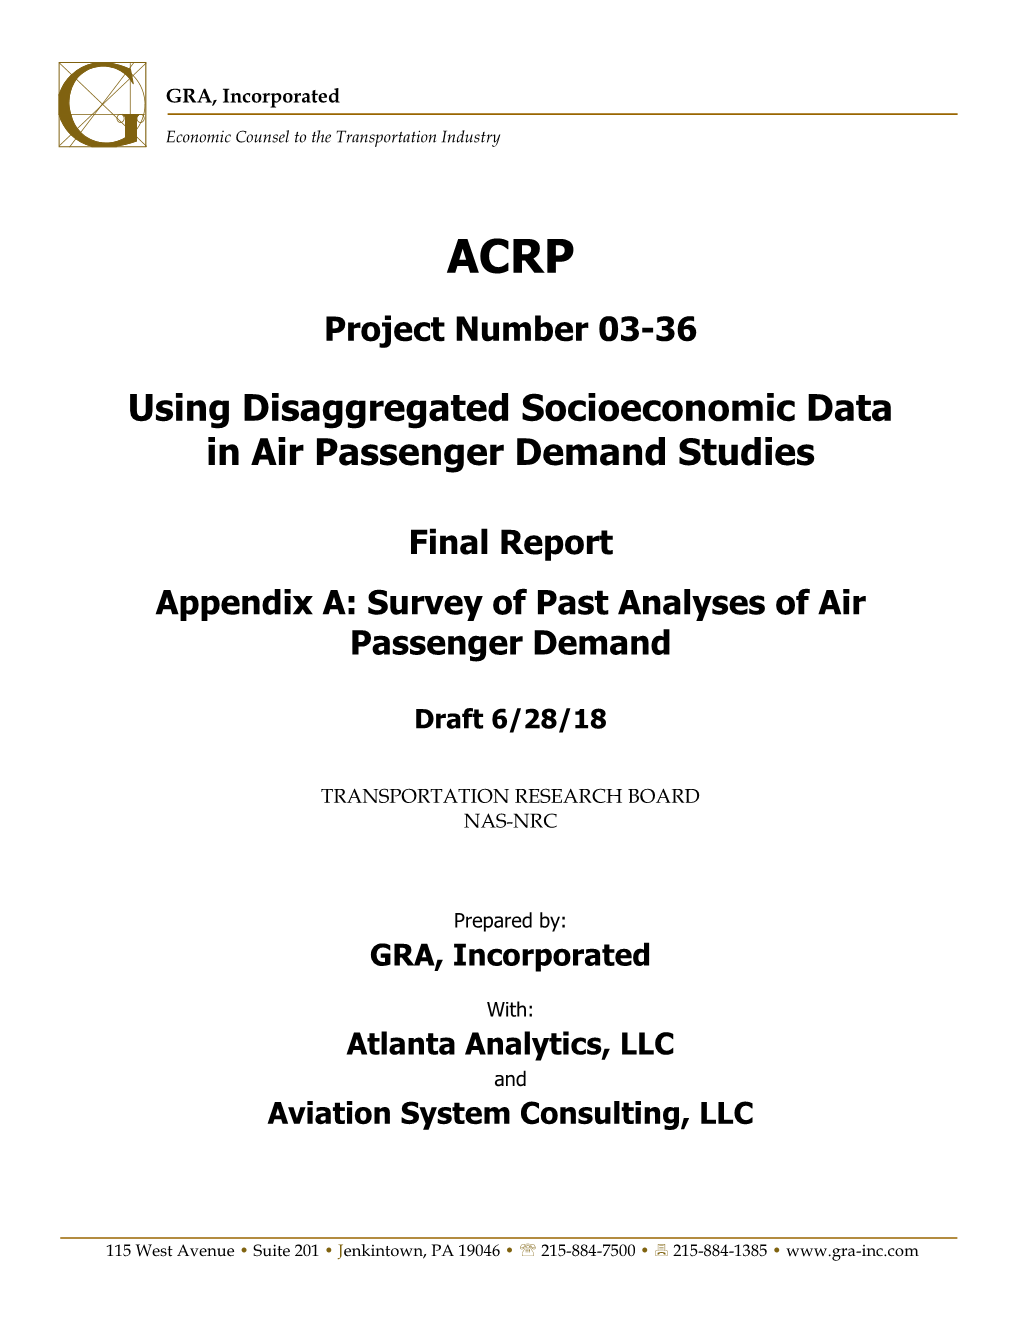 Appendix A: Survey of Past Analyses of Air Passenger Demand